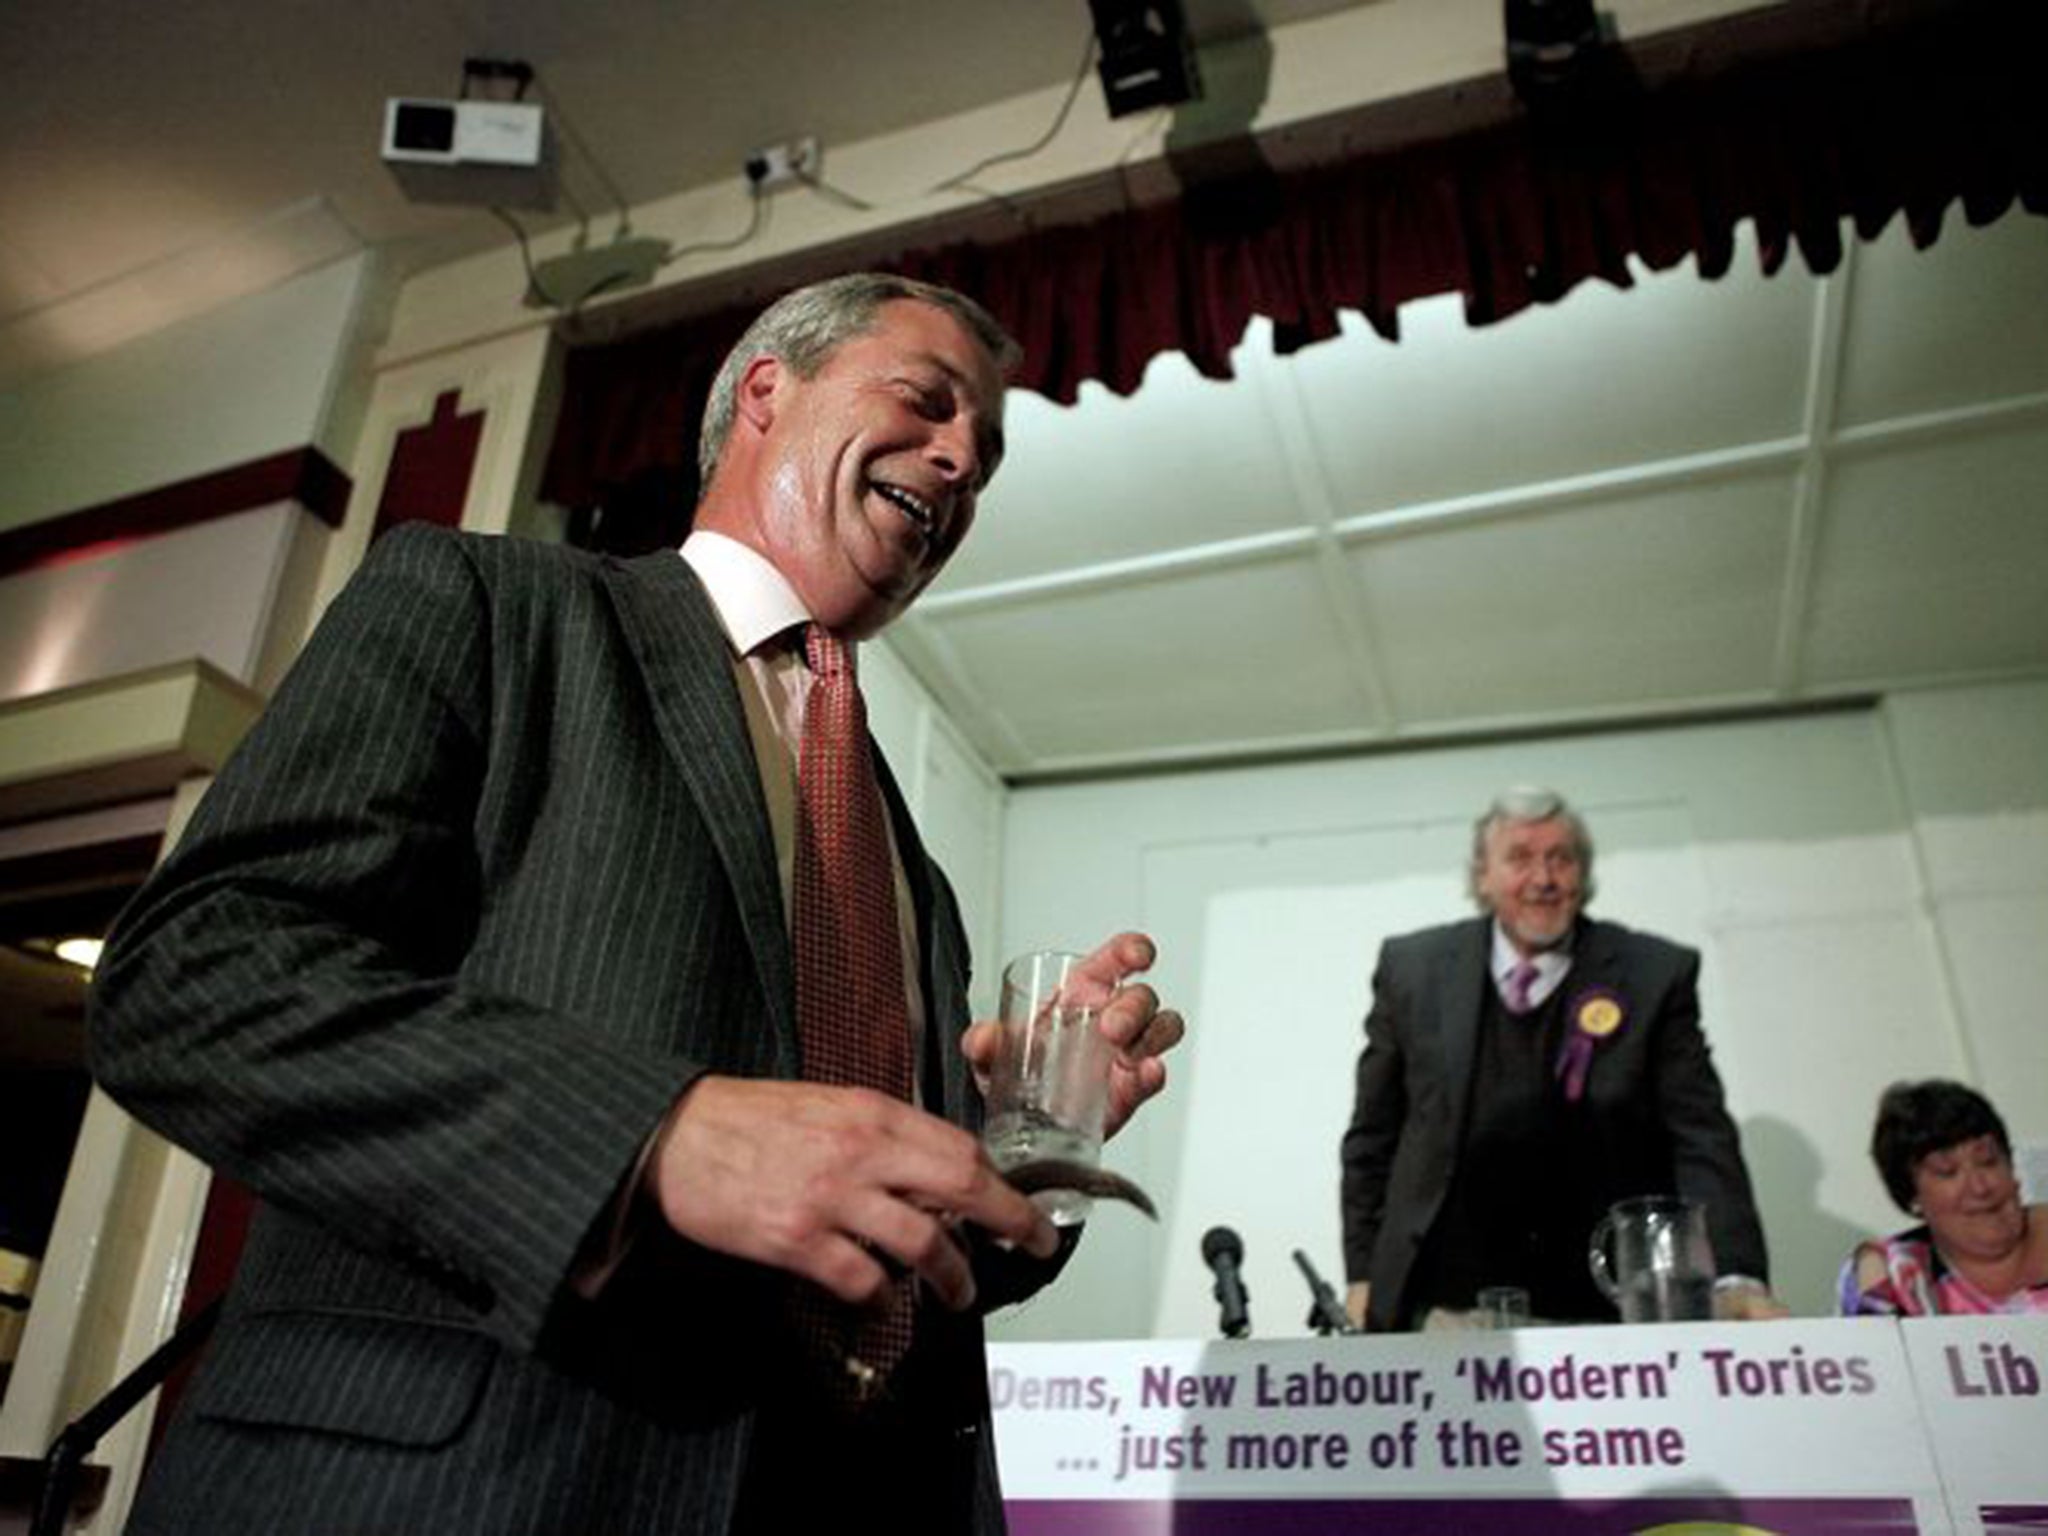 Nigel Farage blames the press, not members, for Ukip’s racist image